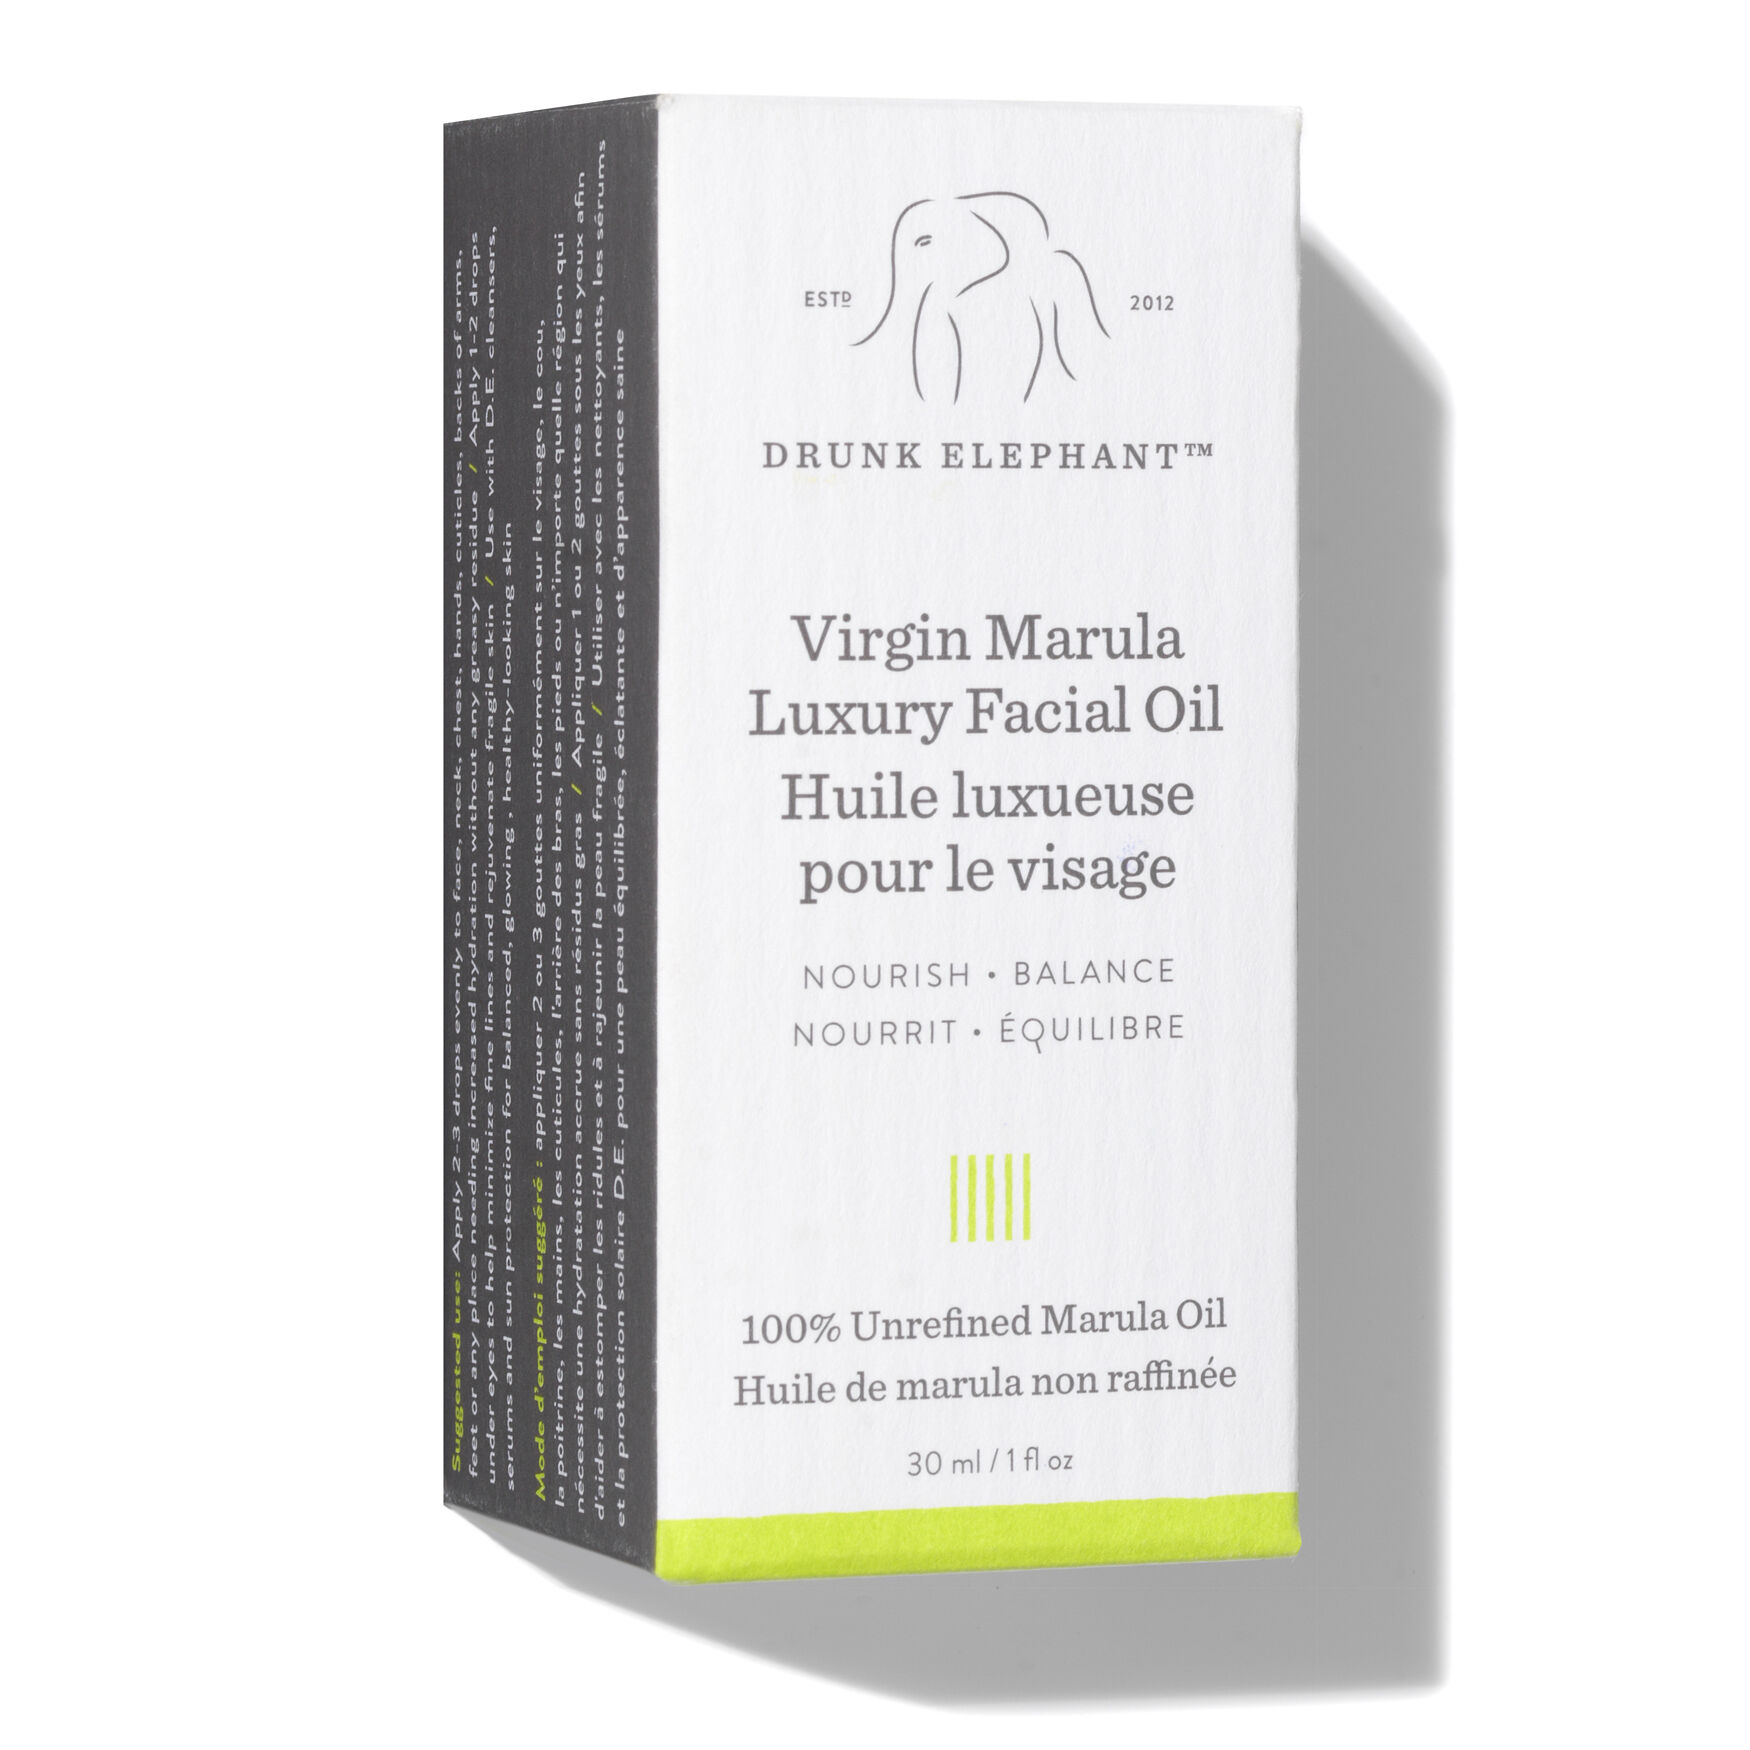 Drunk Elephant Virgin Marula Luxury Facial Oil Marulaöl Karton Box